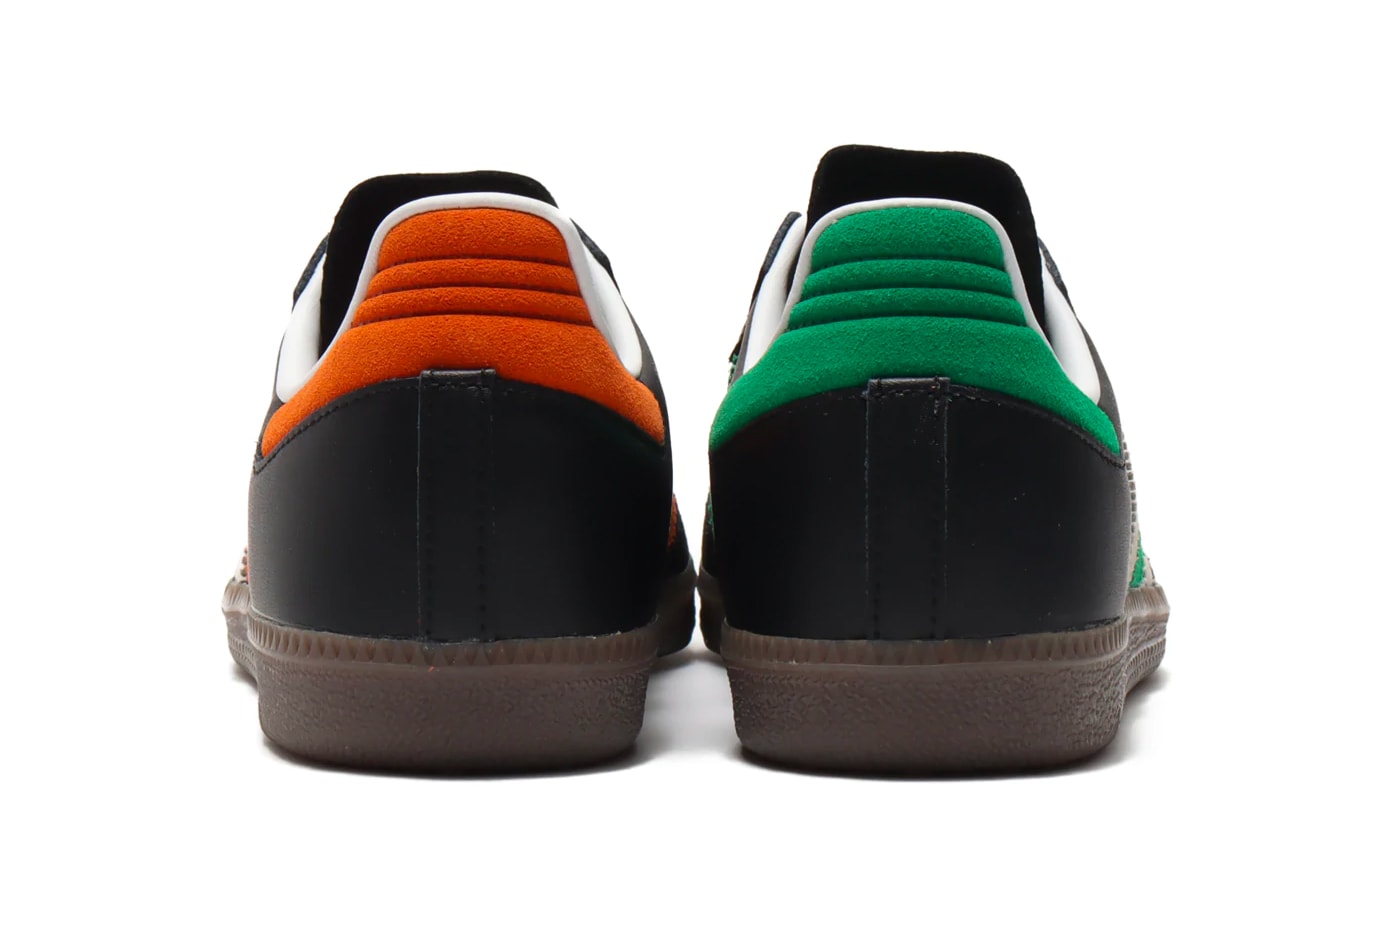 adidas Samba Core Black/Orange FW20 Release trefoil three stripes classic trainers footwear kicks sneakers atmos 